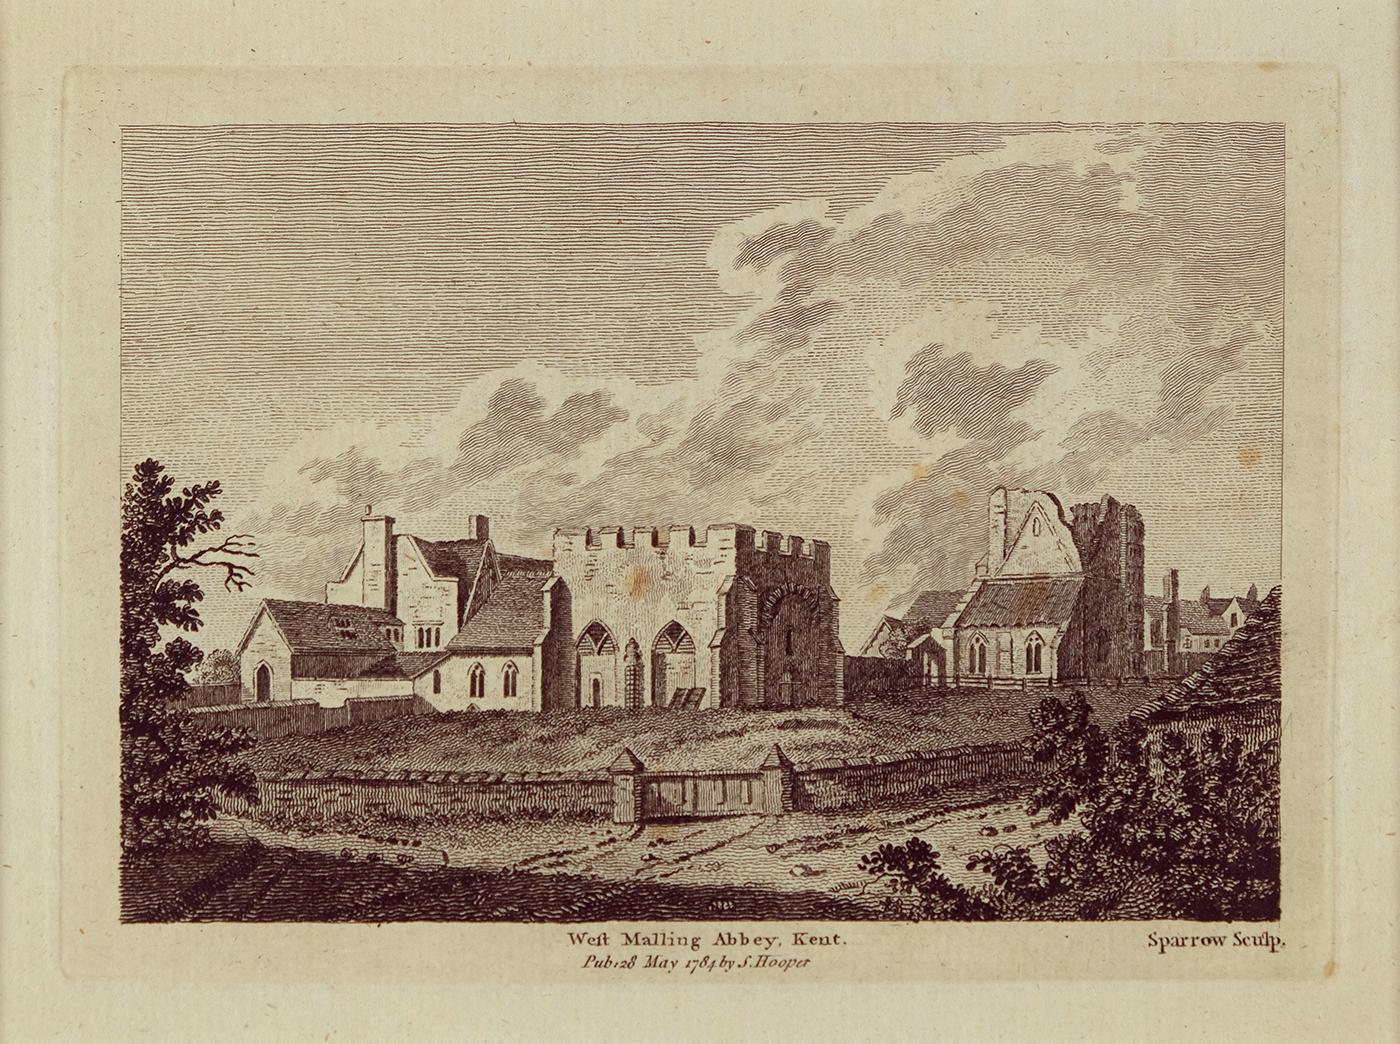 Samuel Hooper Landscape Print - Weft Malling Abbey, Kent. Antique print